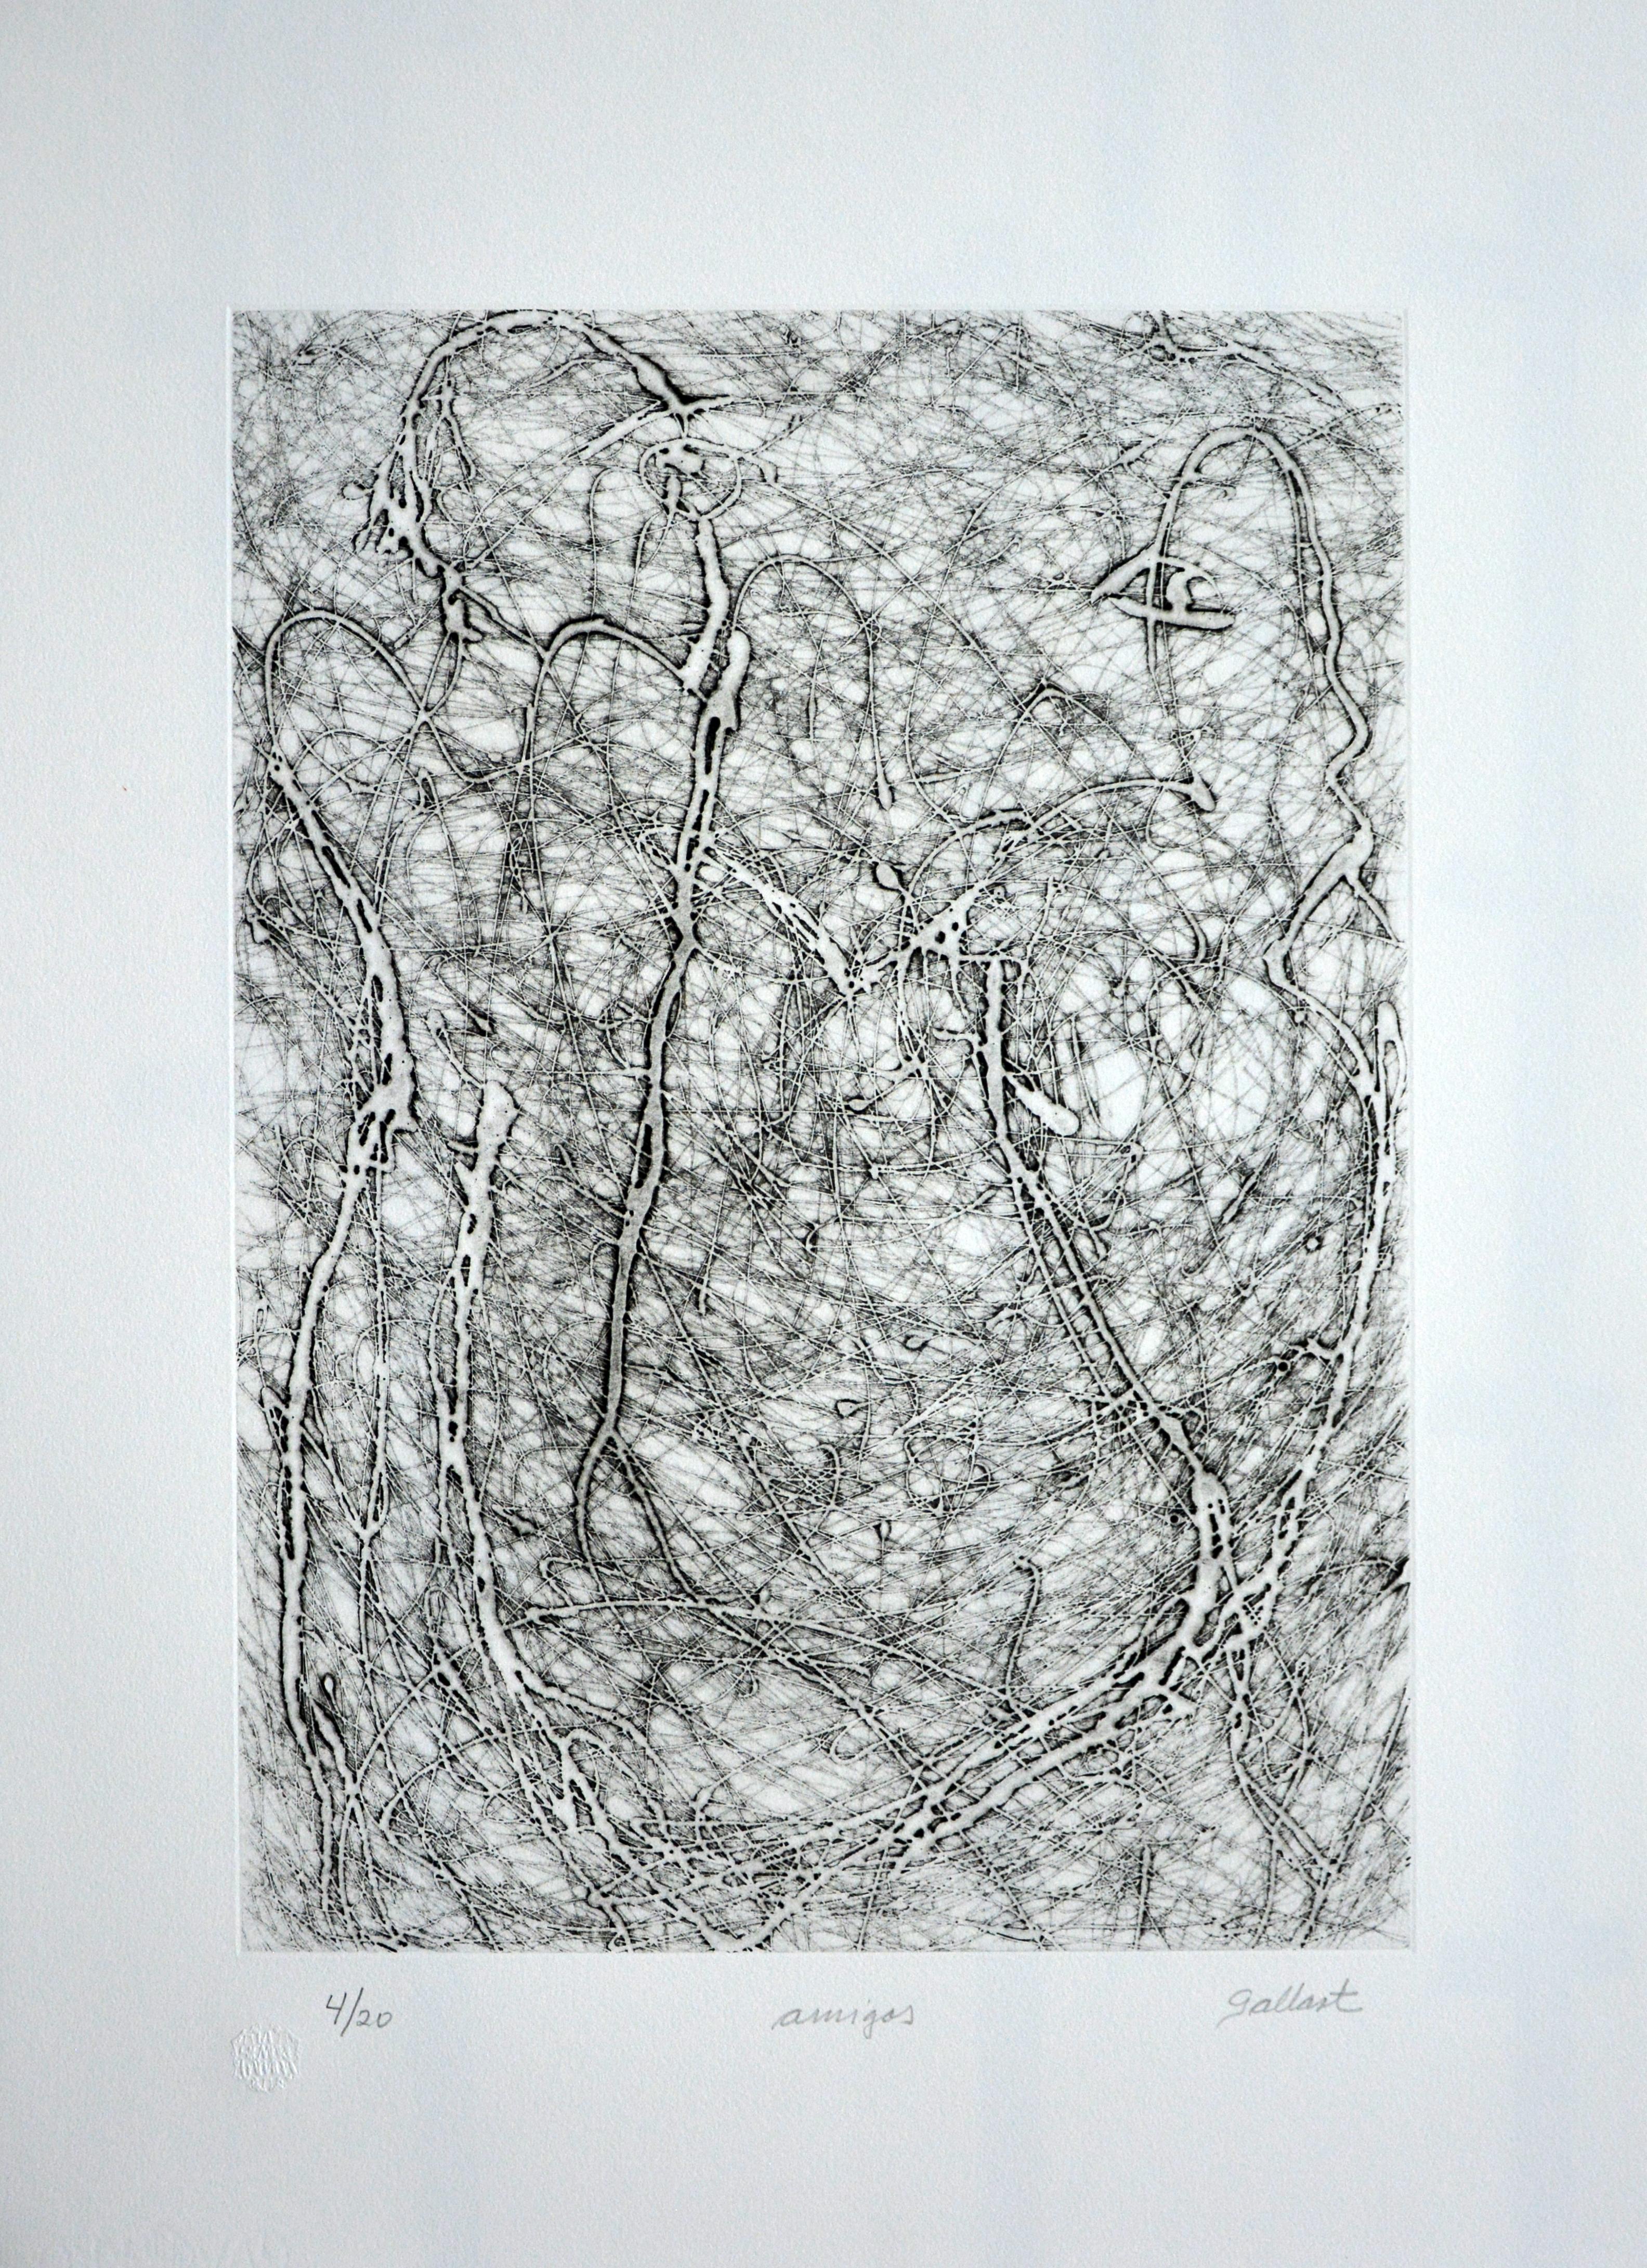 Enrique Gallart (Mexico, 1948)
'Amigos', 2012
collagraph on paper Guarro Biblos 250g.
28.6 x 20.9 in. (72.5 x 53 cm.)
Edition of 20
ID: GAL-101
Unframed